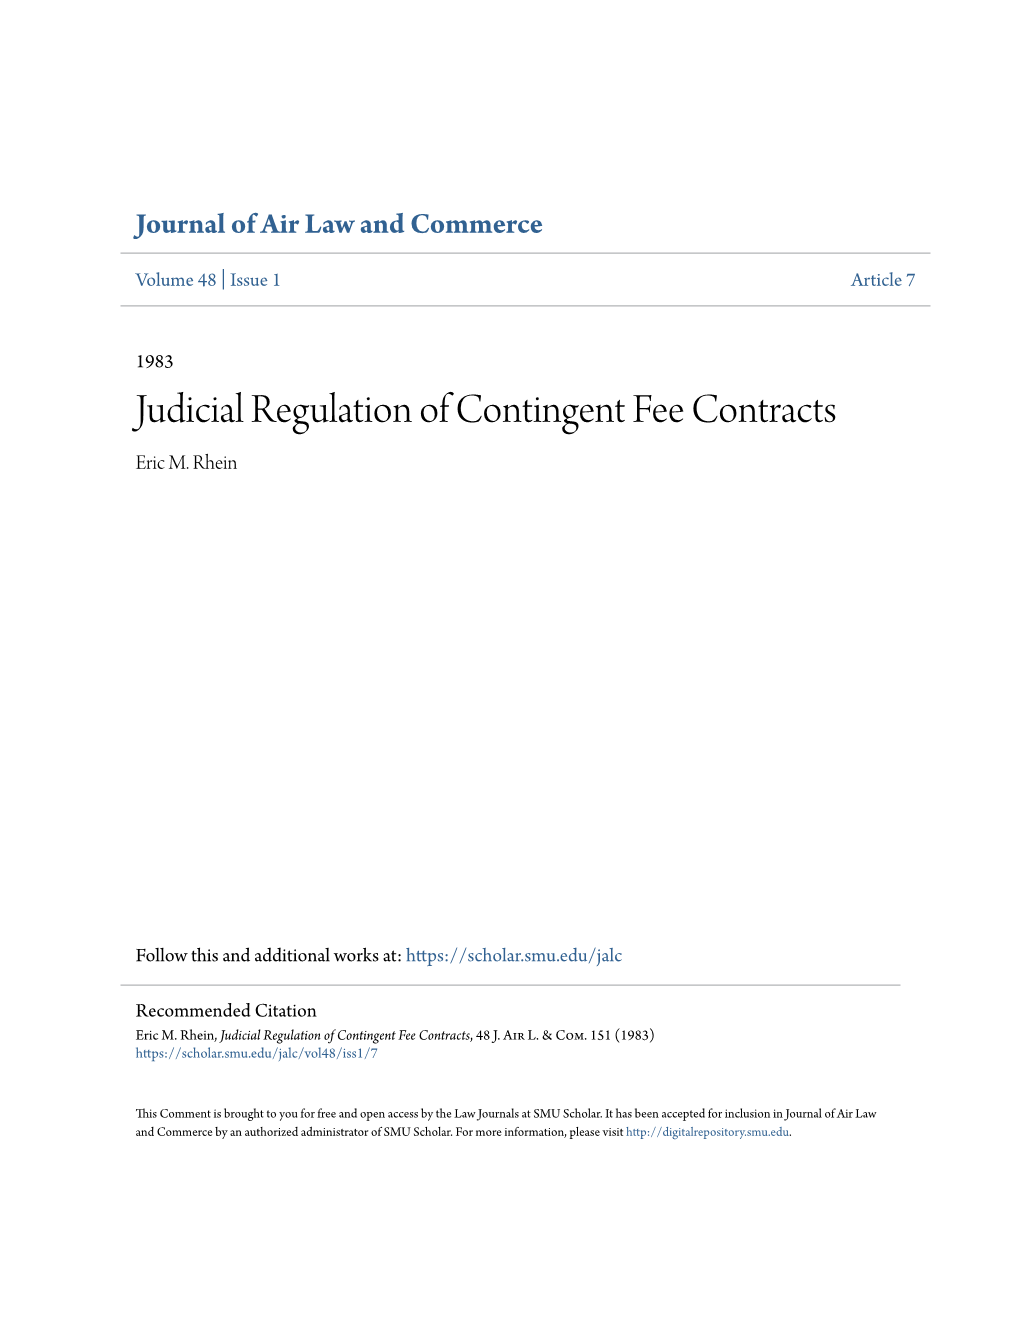 Judicial Regulation of Contingent Fee Contracts Eric M